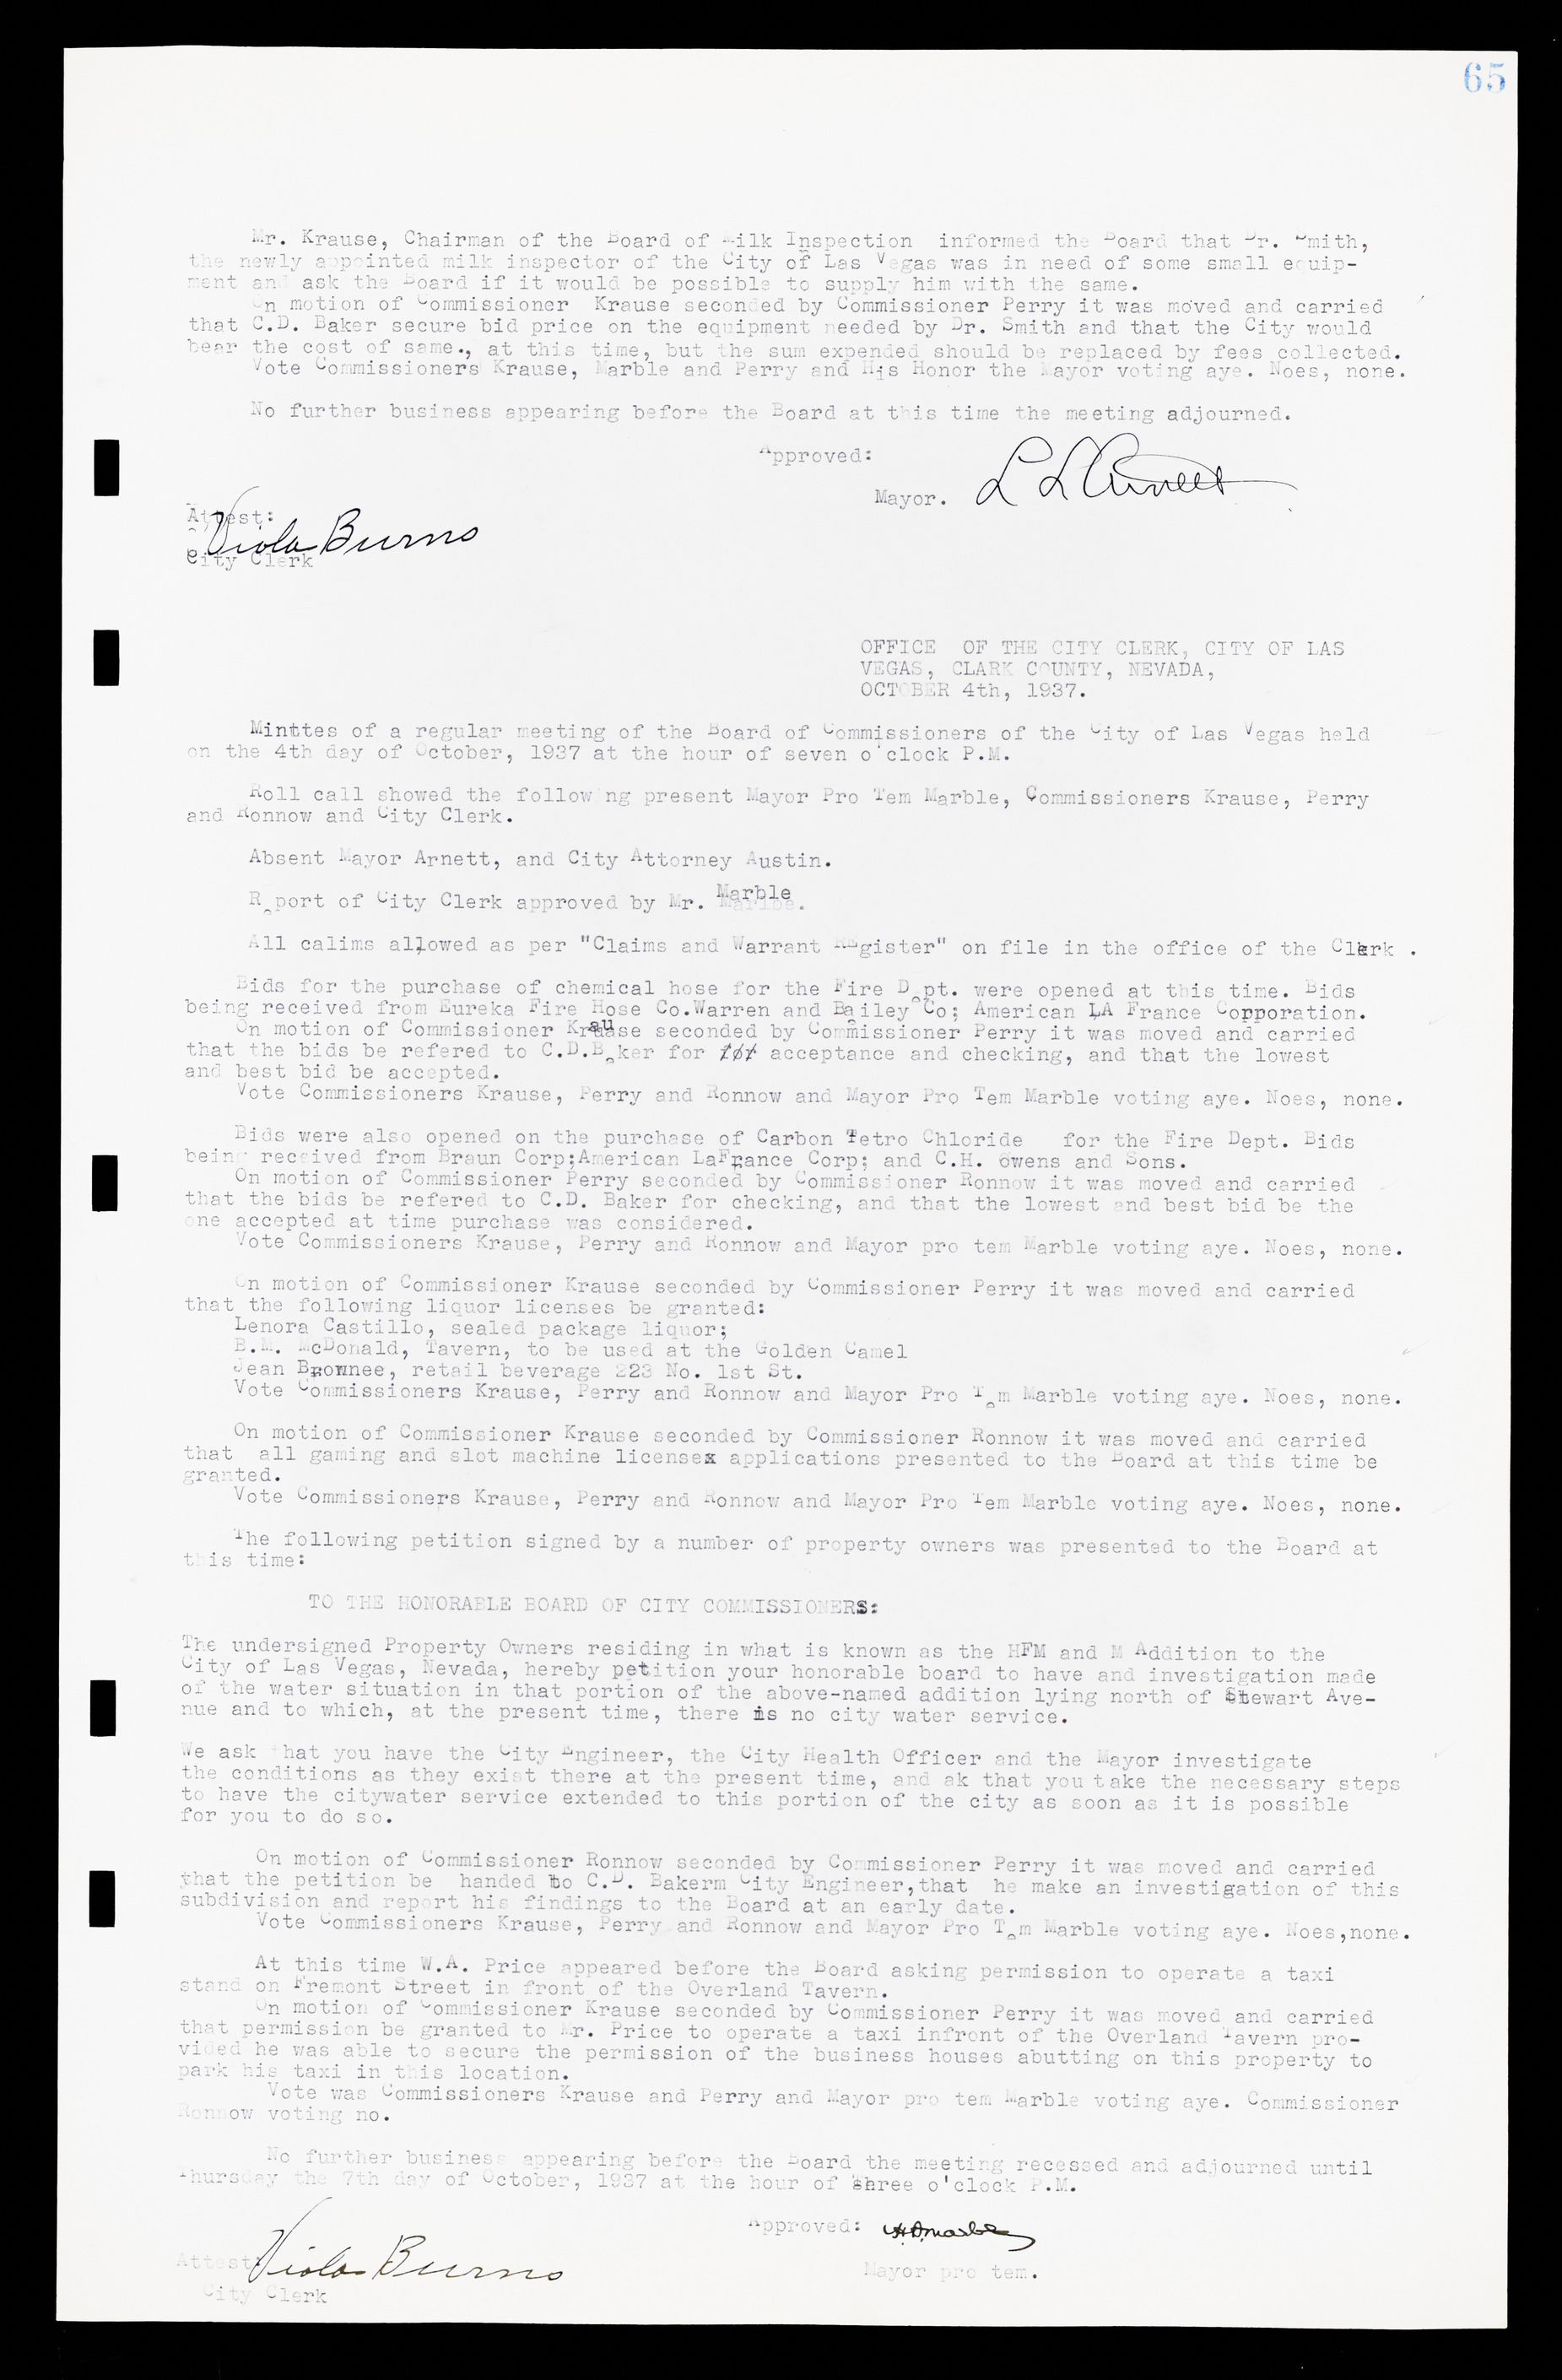 Las Vegas City Commission Minutes, February 17, 1937 to August 4, 1942, lvc000004-74